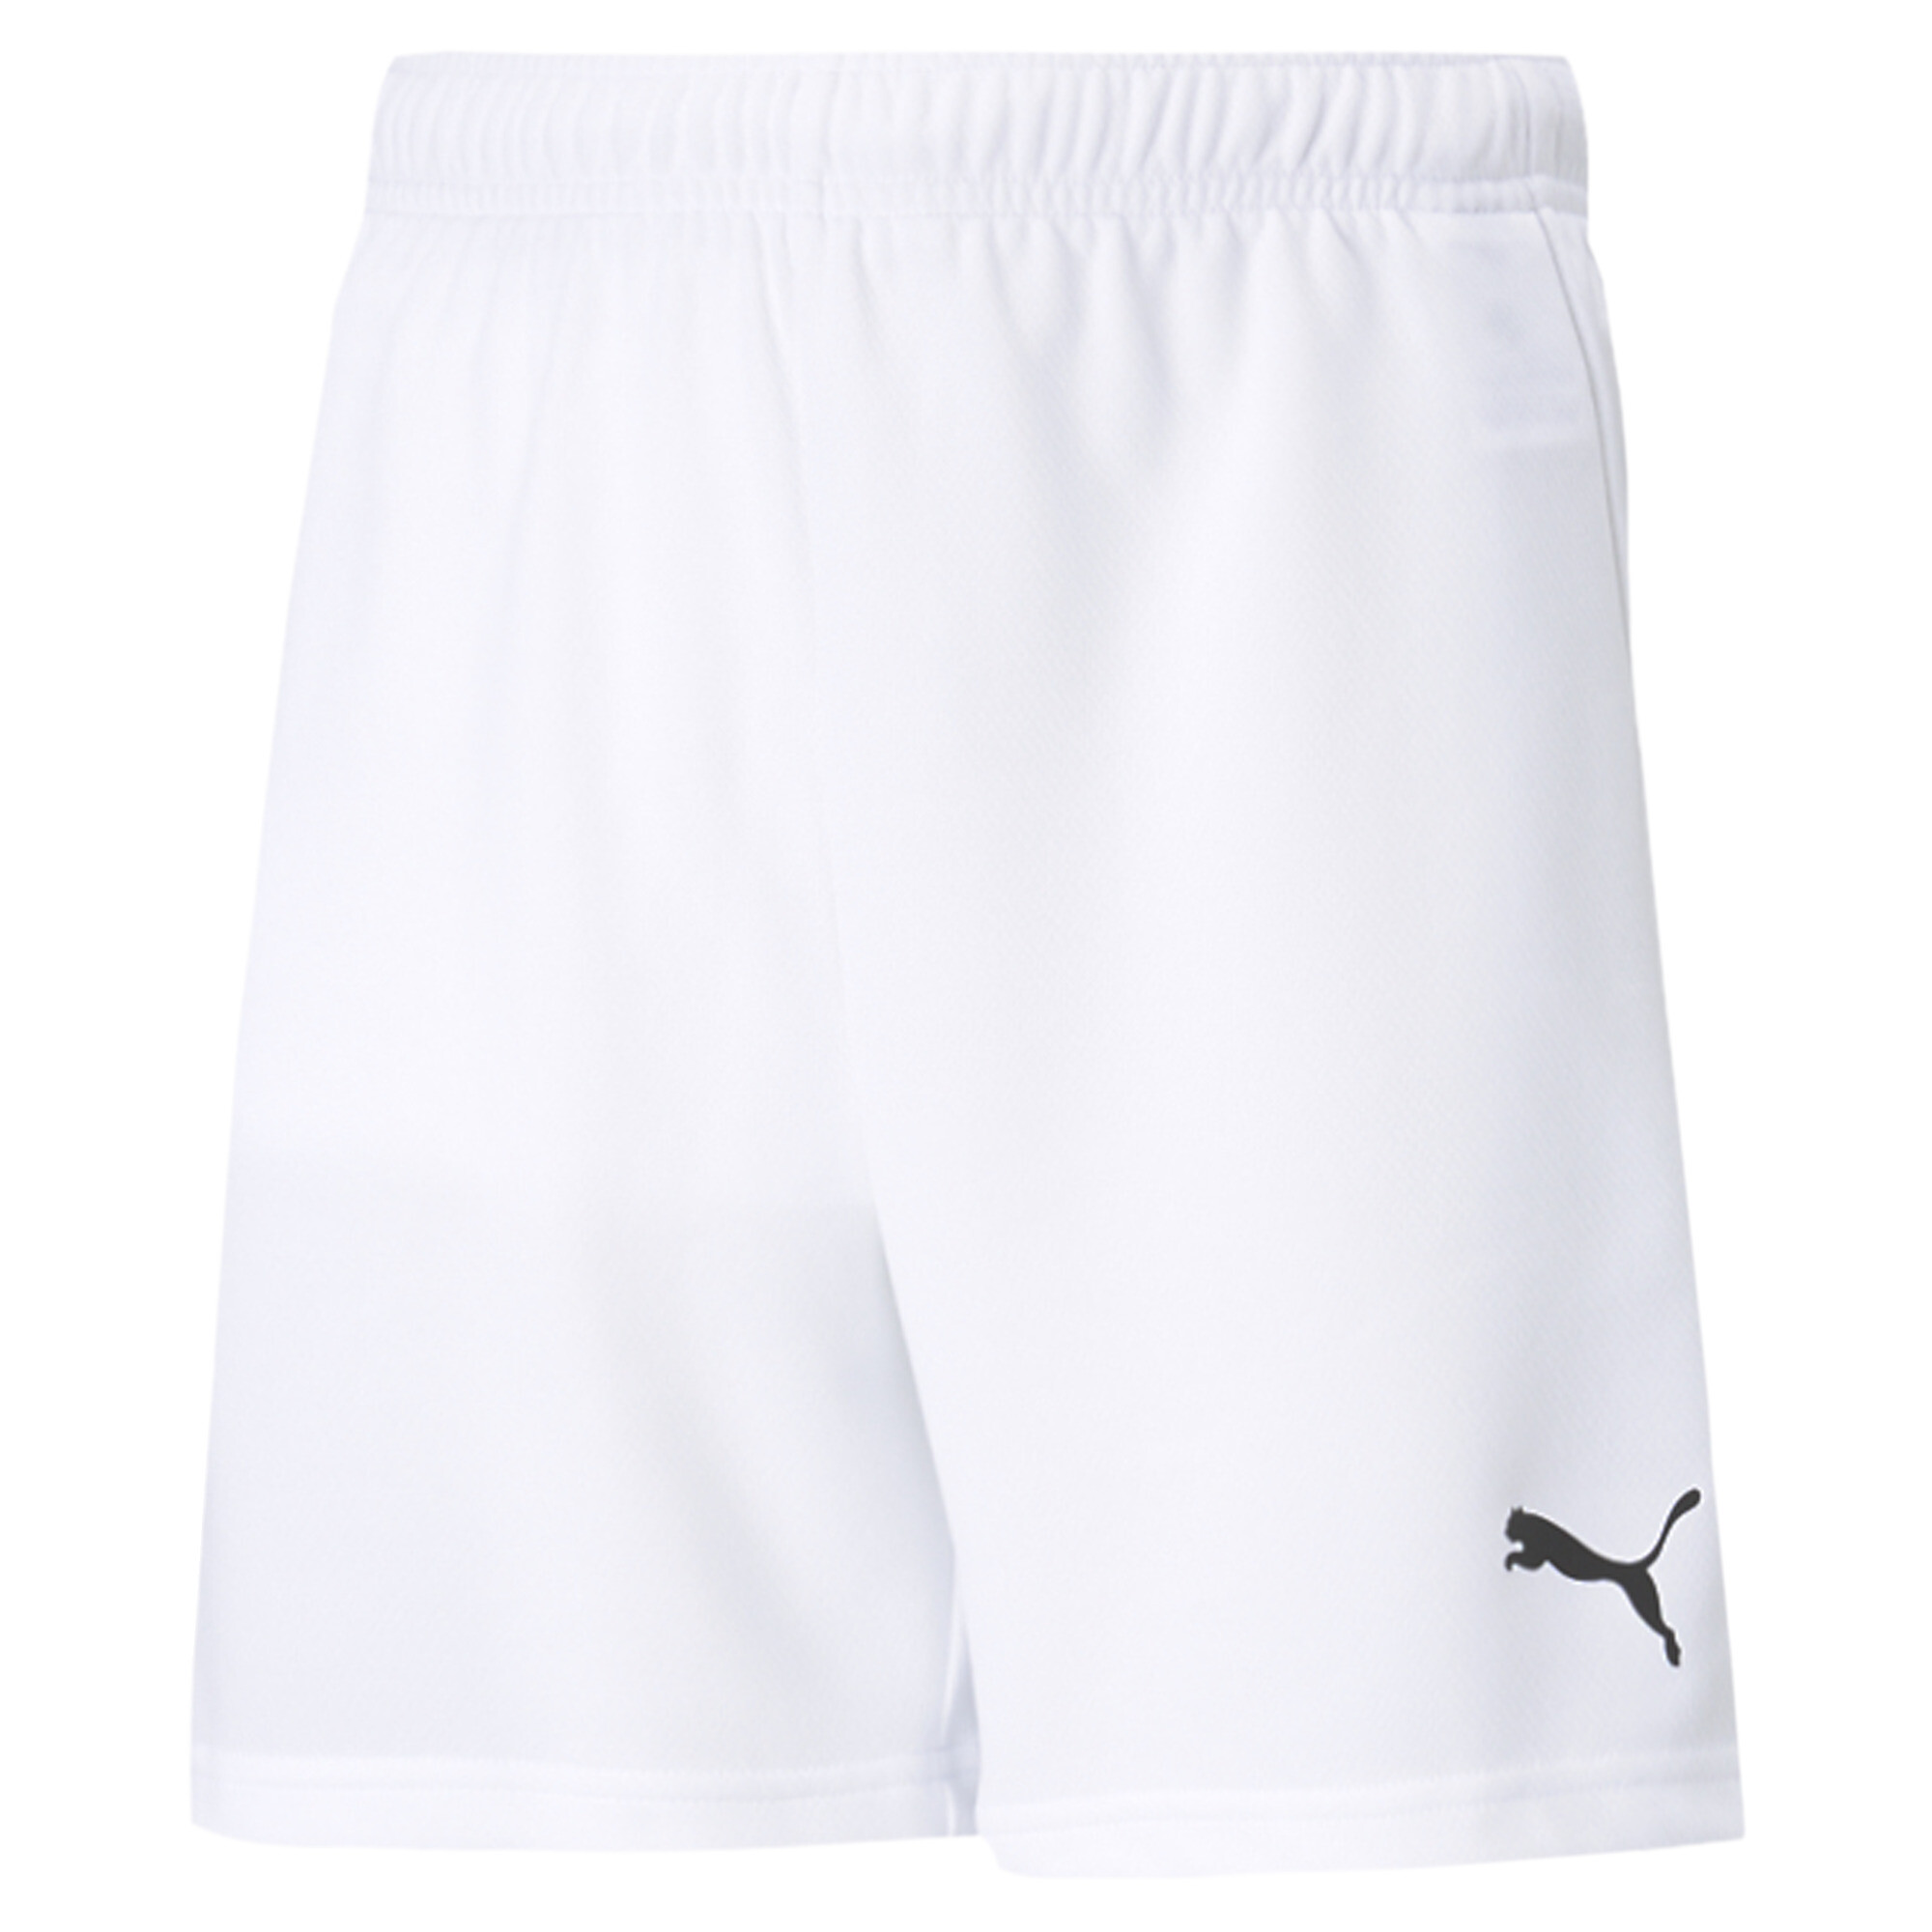 Puma Team RISE Youth Football Shorts, White, Size 15-16Y, Clothing